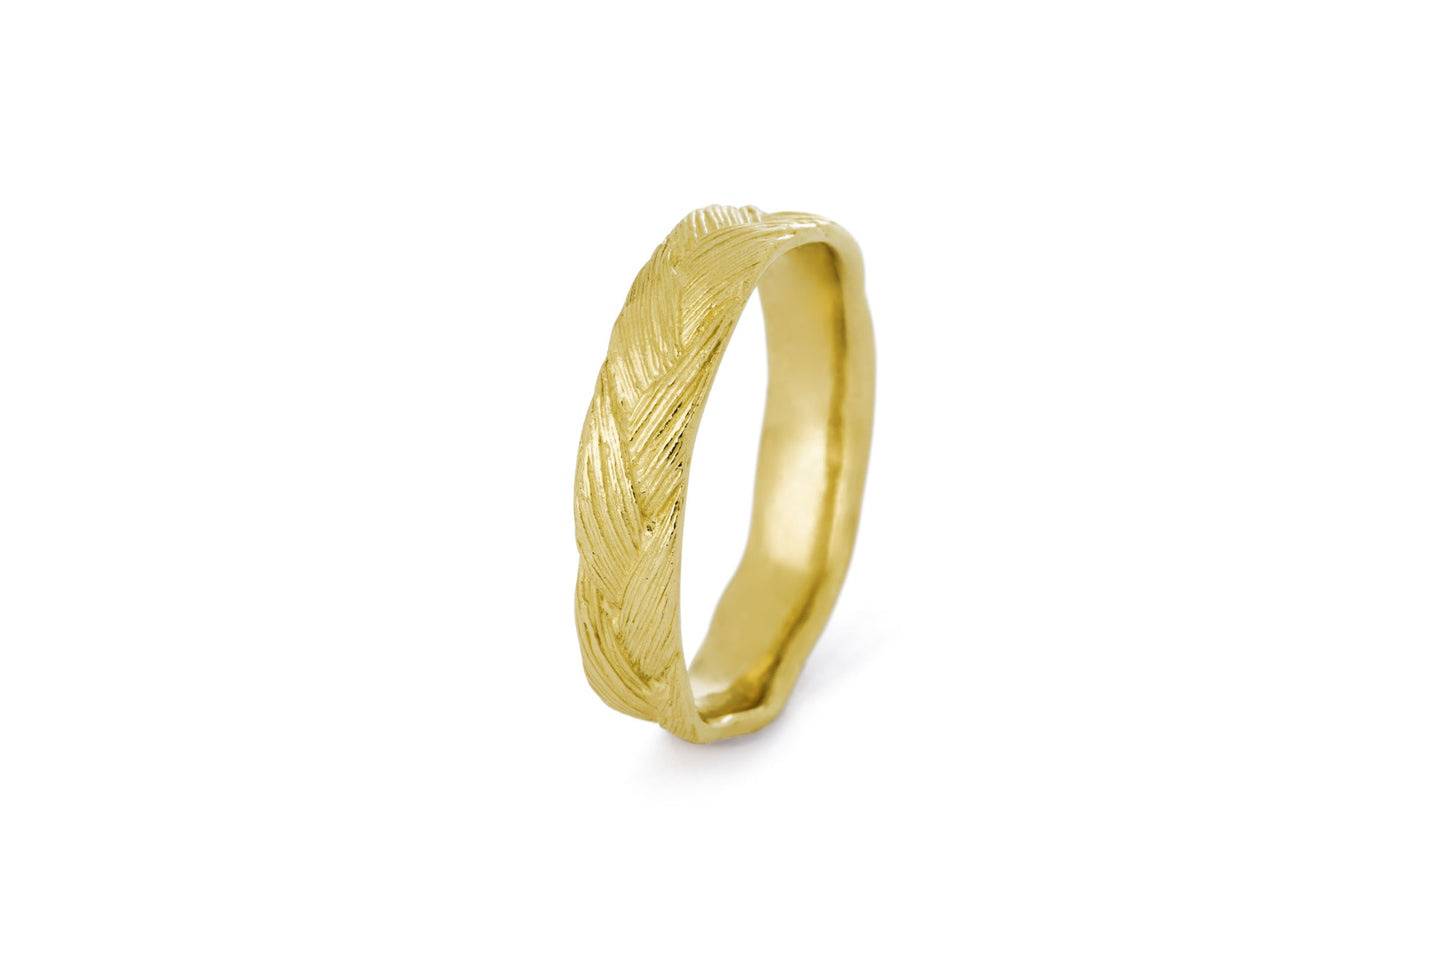 Braid Wedding Ring - Gold thick braid